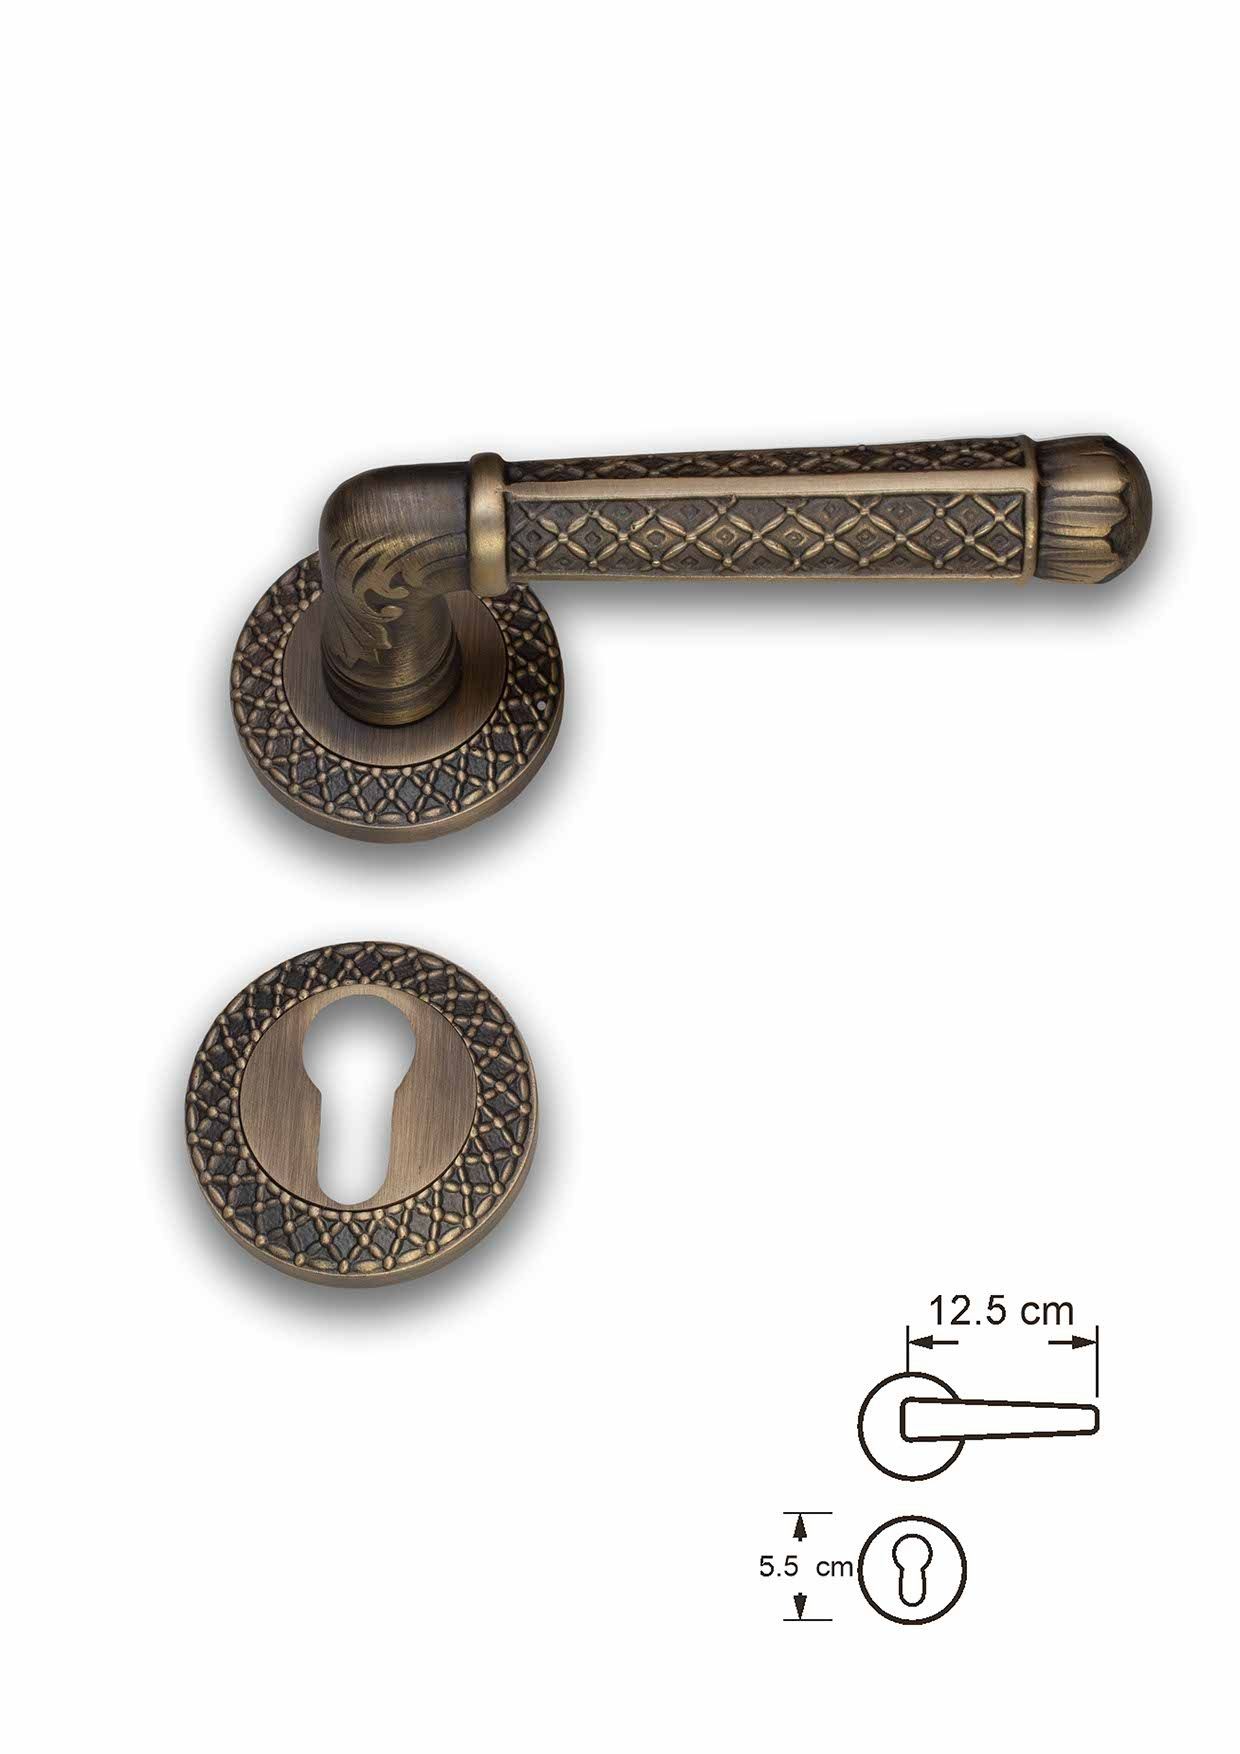 Custom Brass Lever Rose Handles: Exquisite Craftsmanship for Elegant Door Hardware